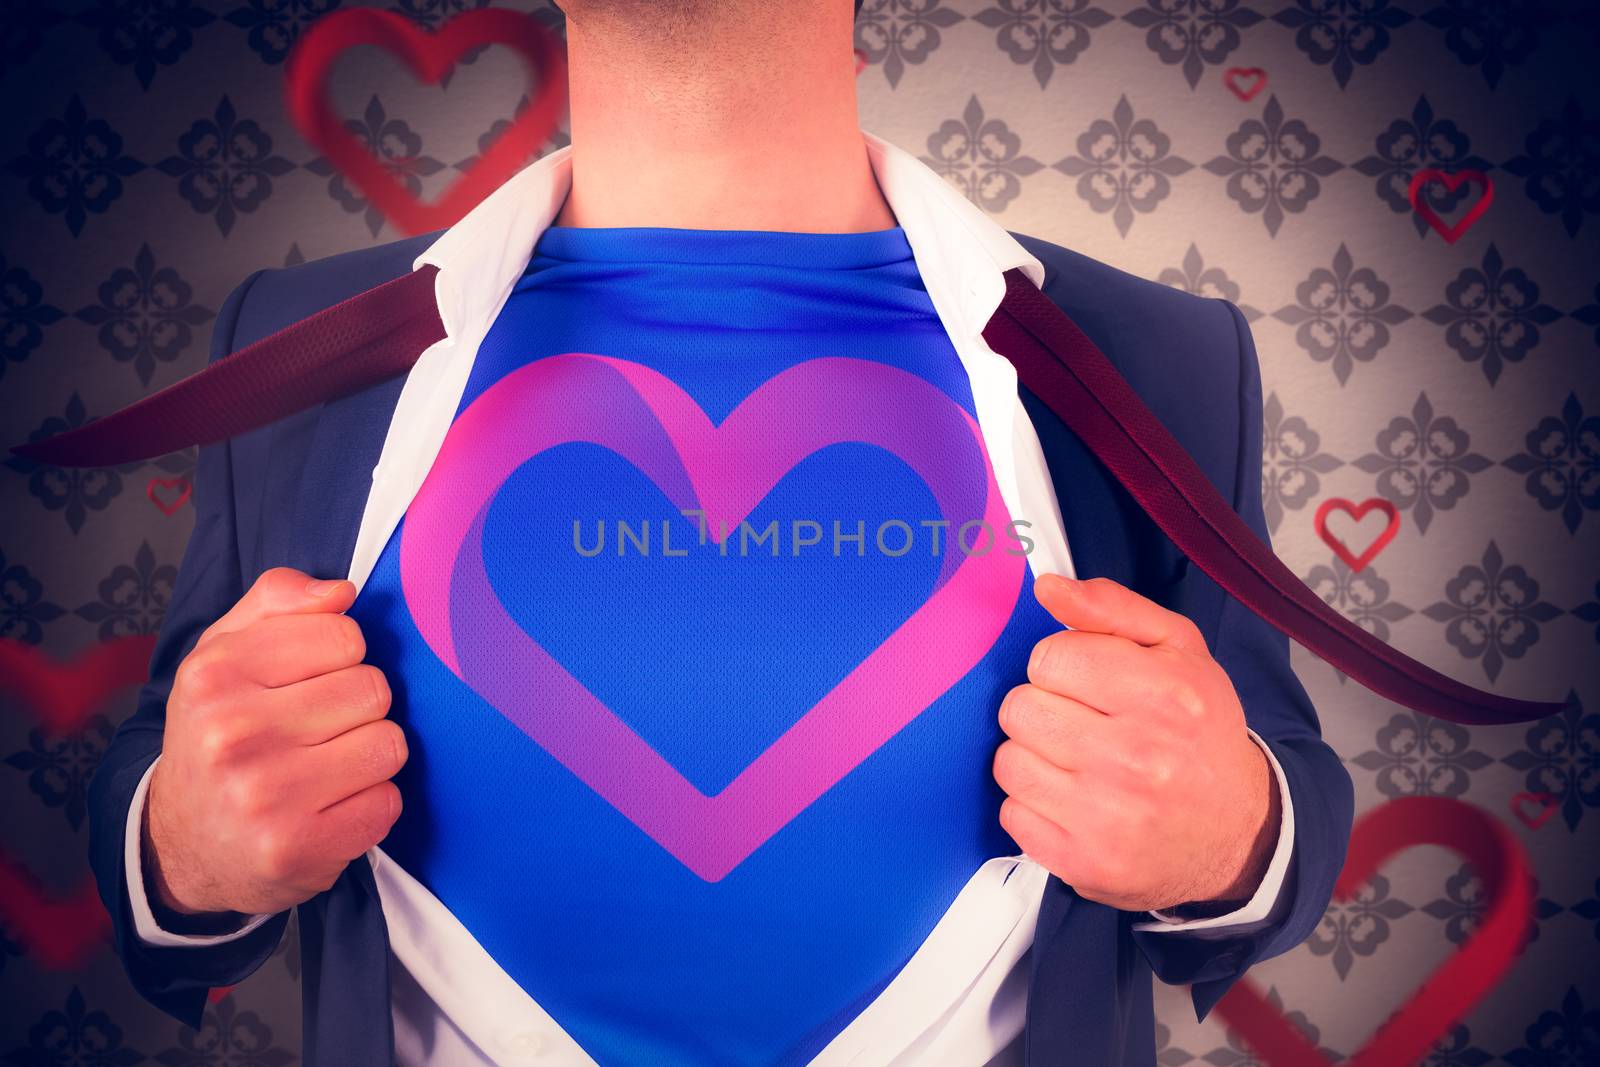 Businessman opening his shirt superhero style against love heart pattern